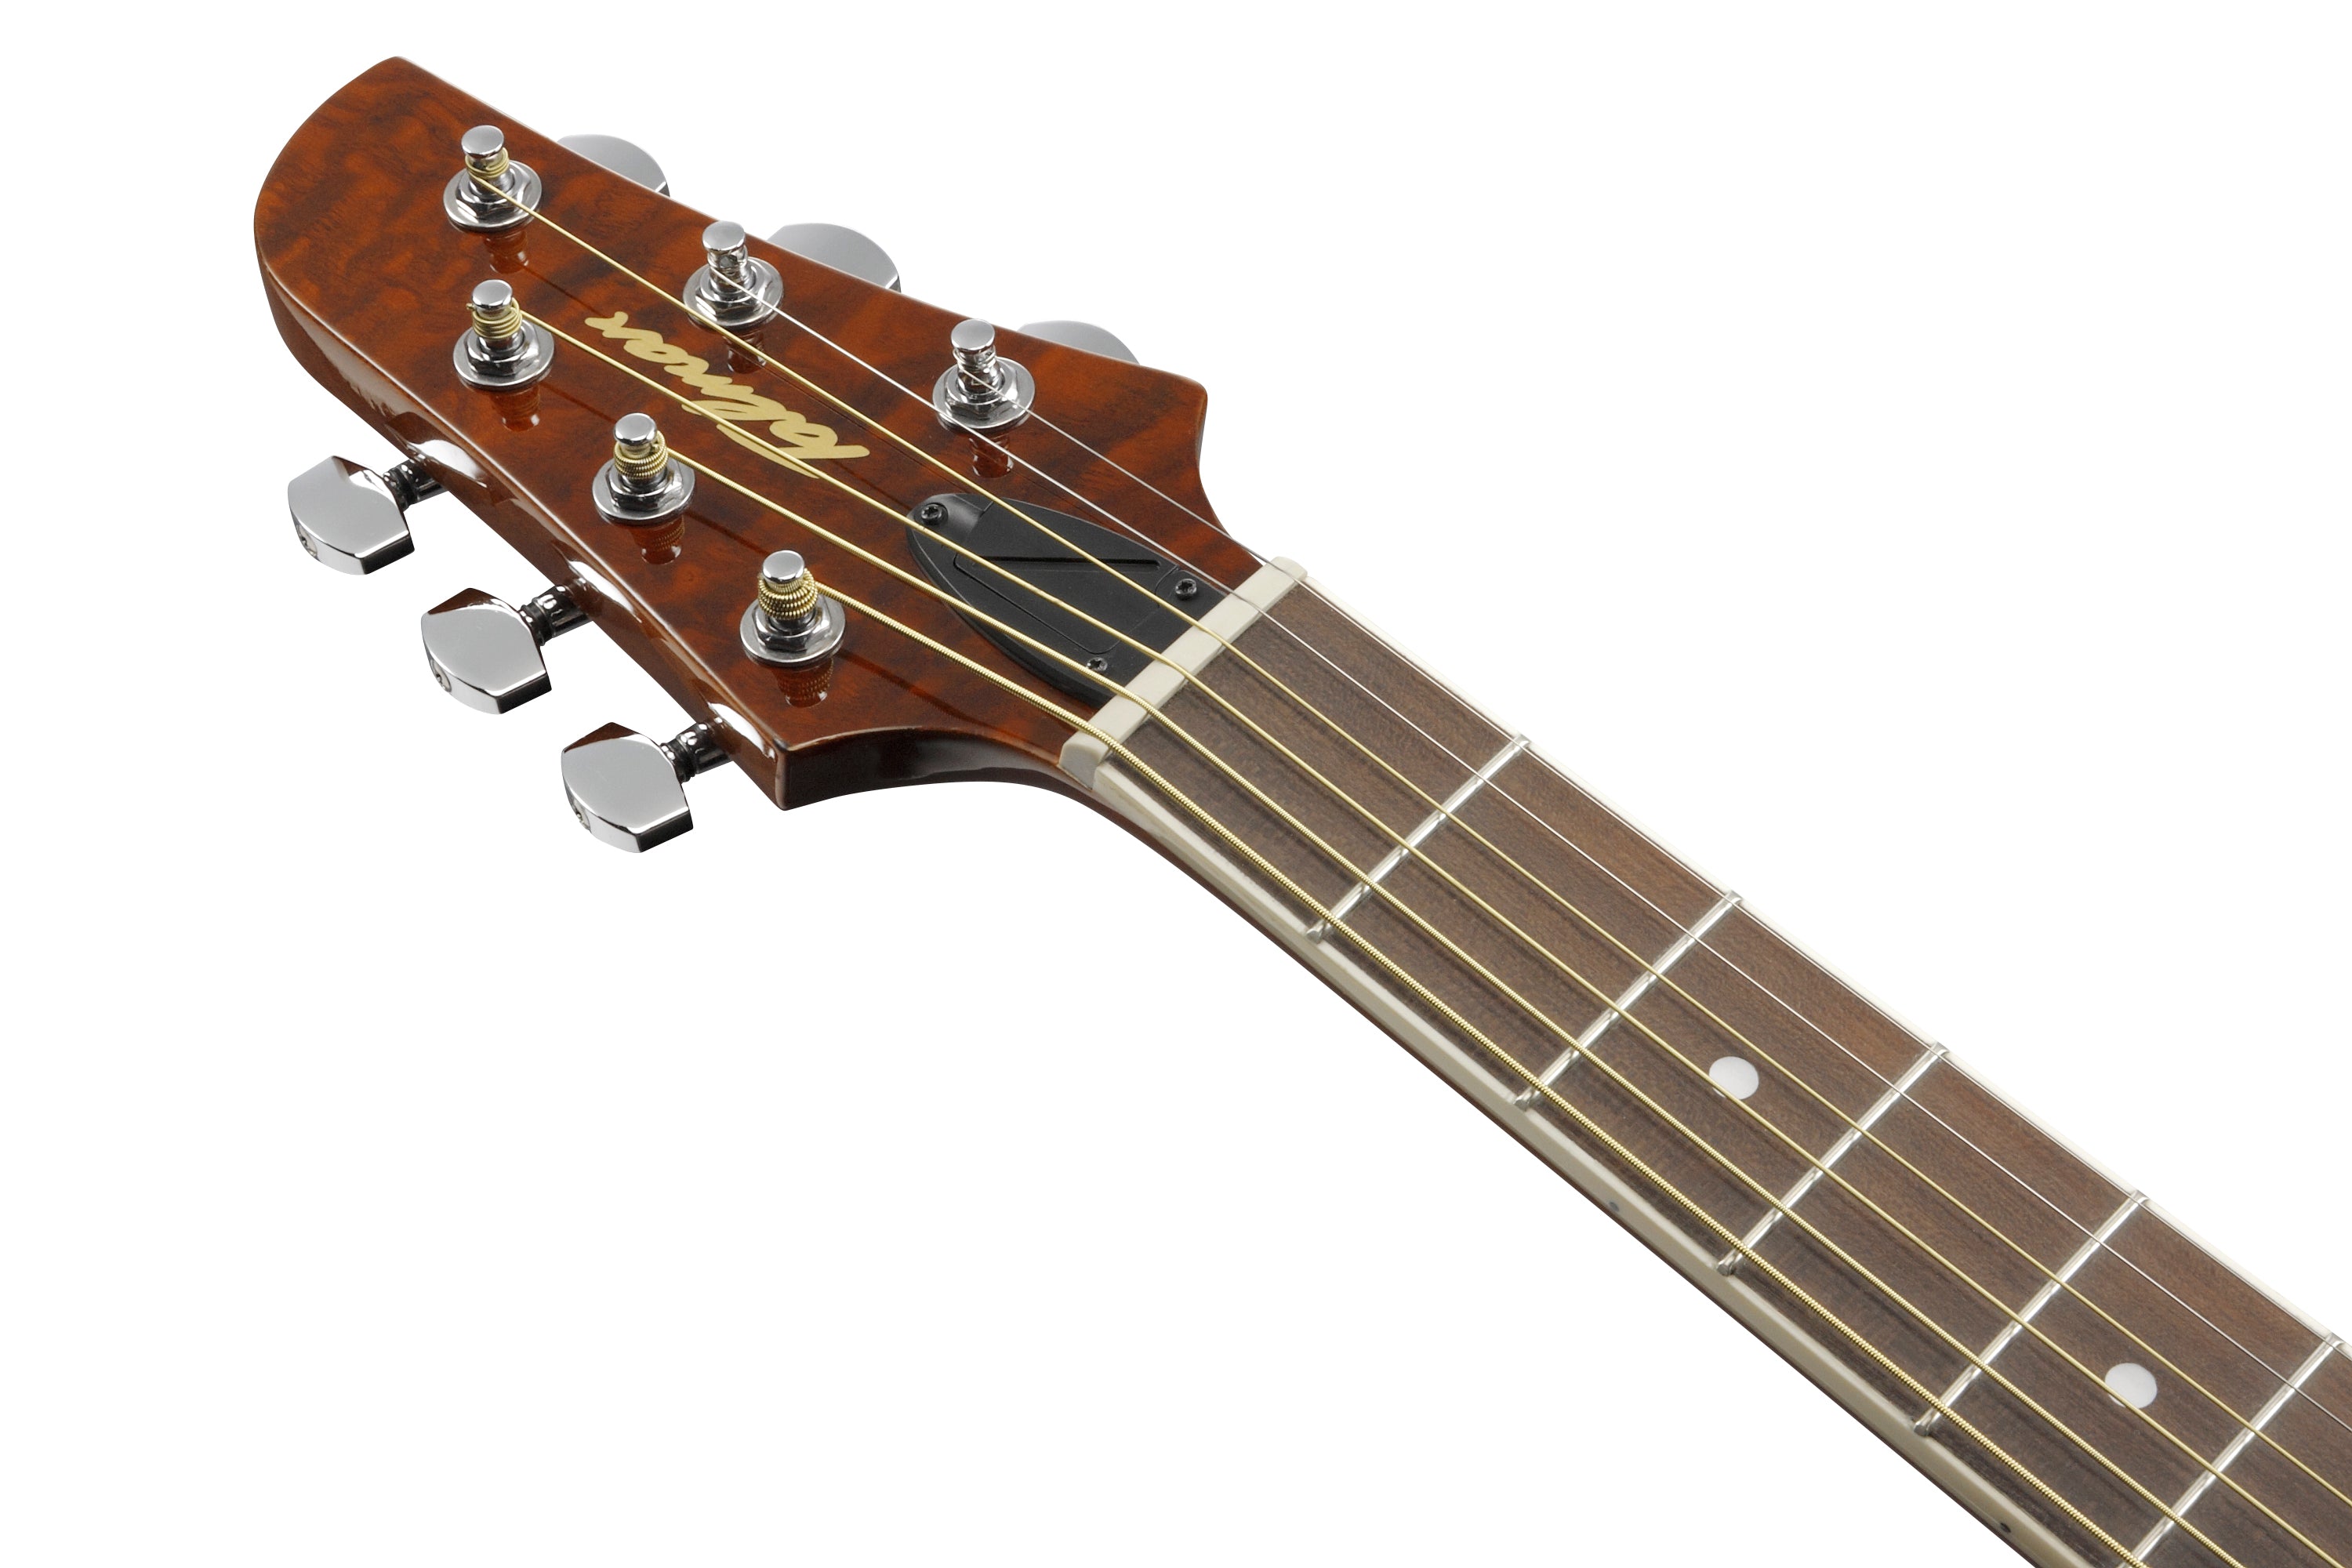 Ibanez TCM50 Acoustic Guitar (Vintage Brown Sunburst High Gloss)